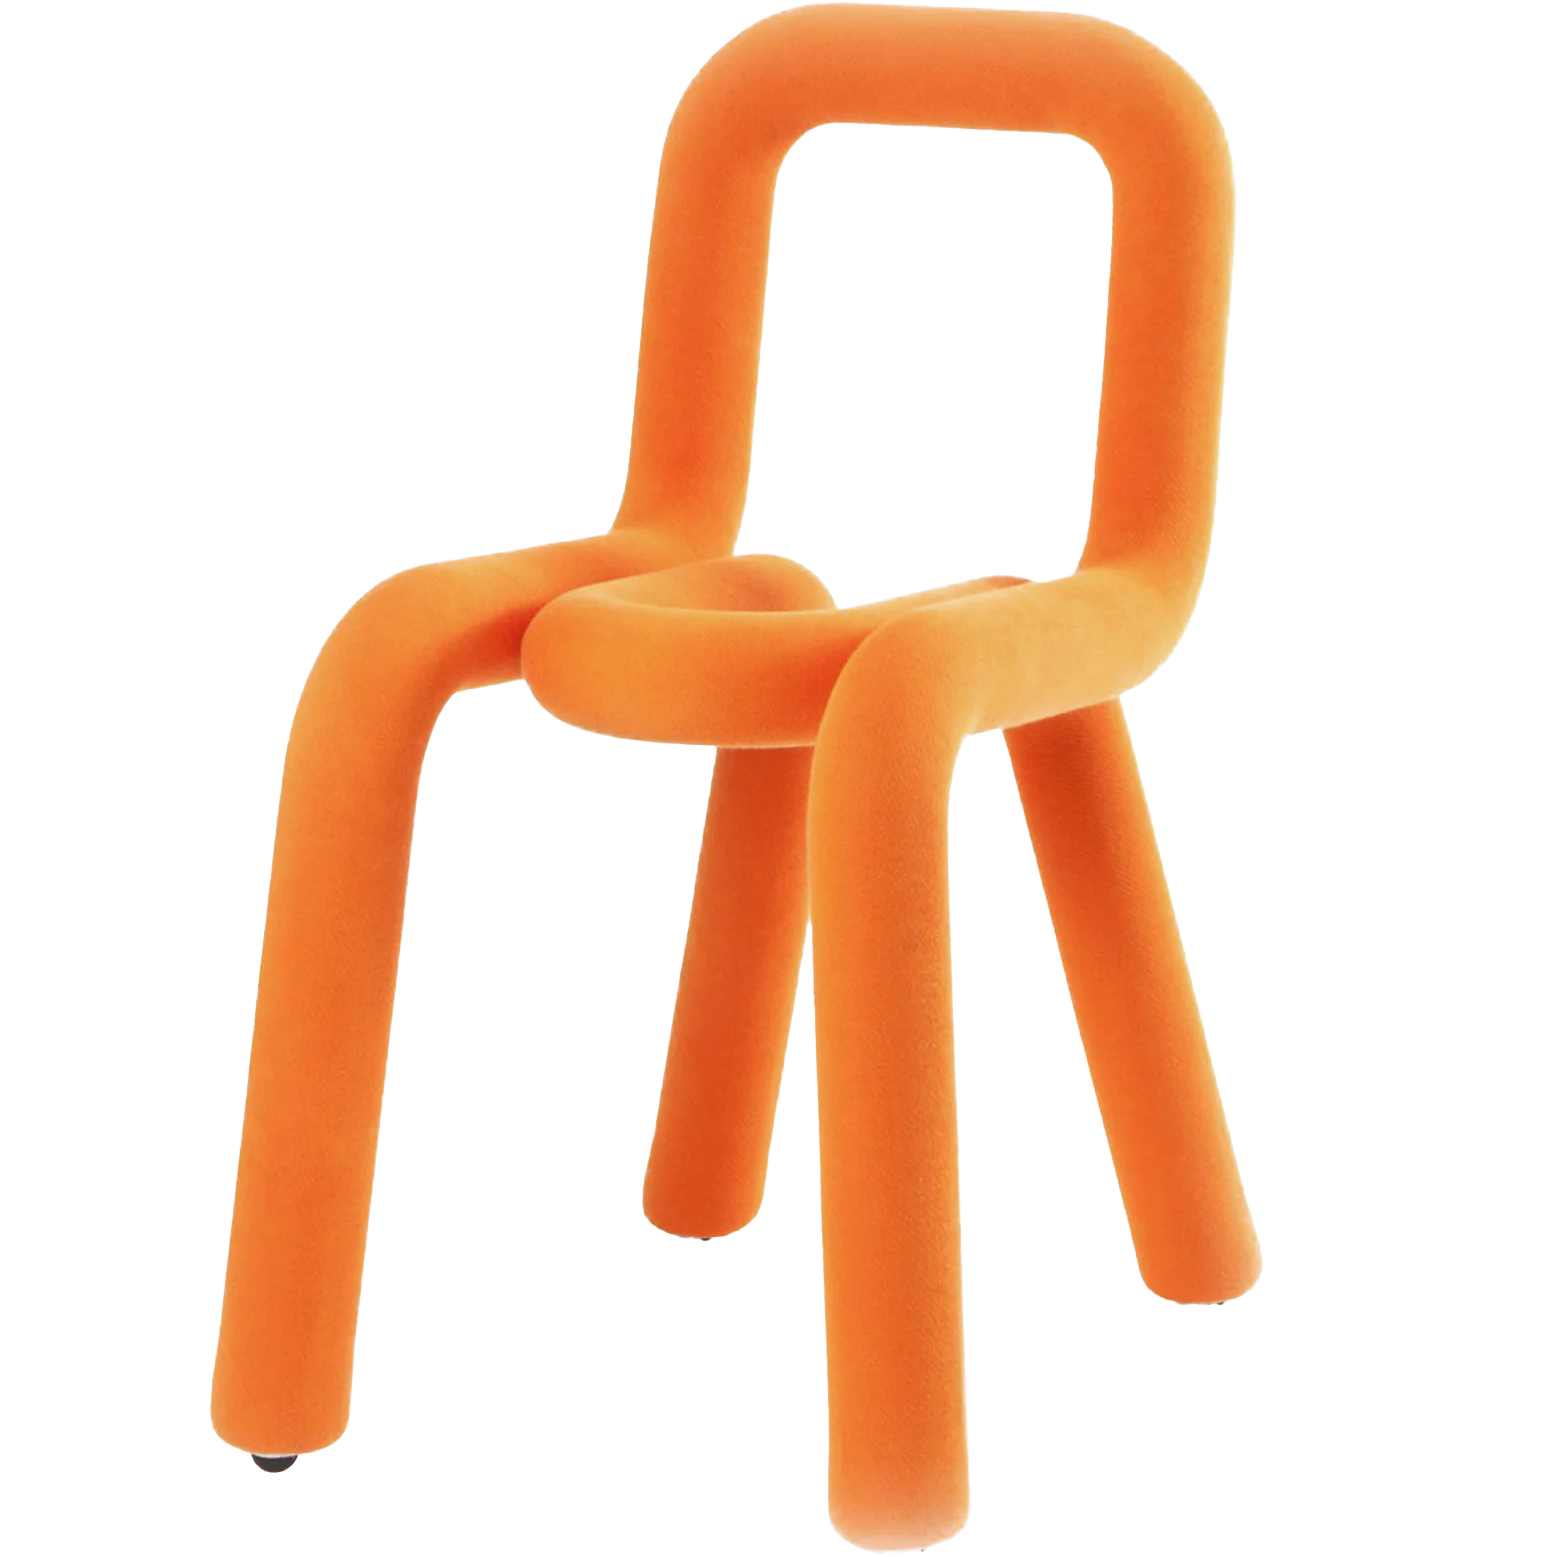 Bold chair - orange by Moustache